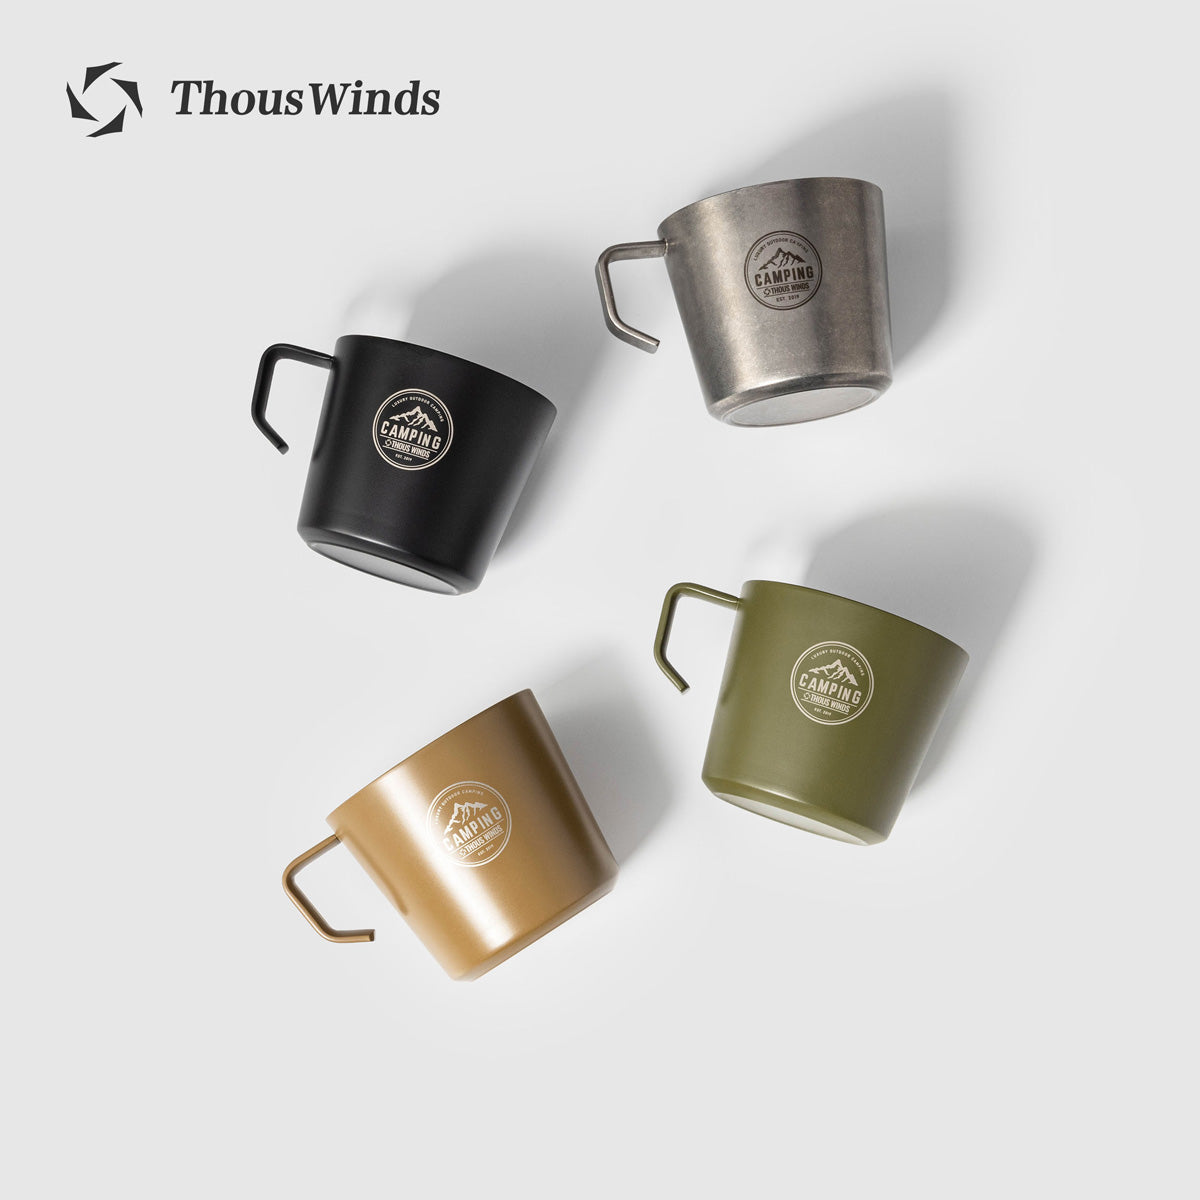 ThousWinds 250ml Double Wall Mug - Vintage Silver